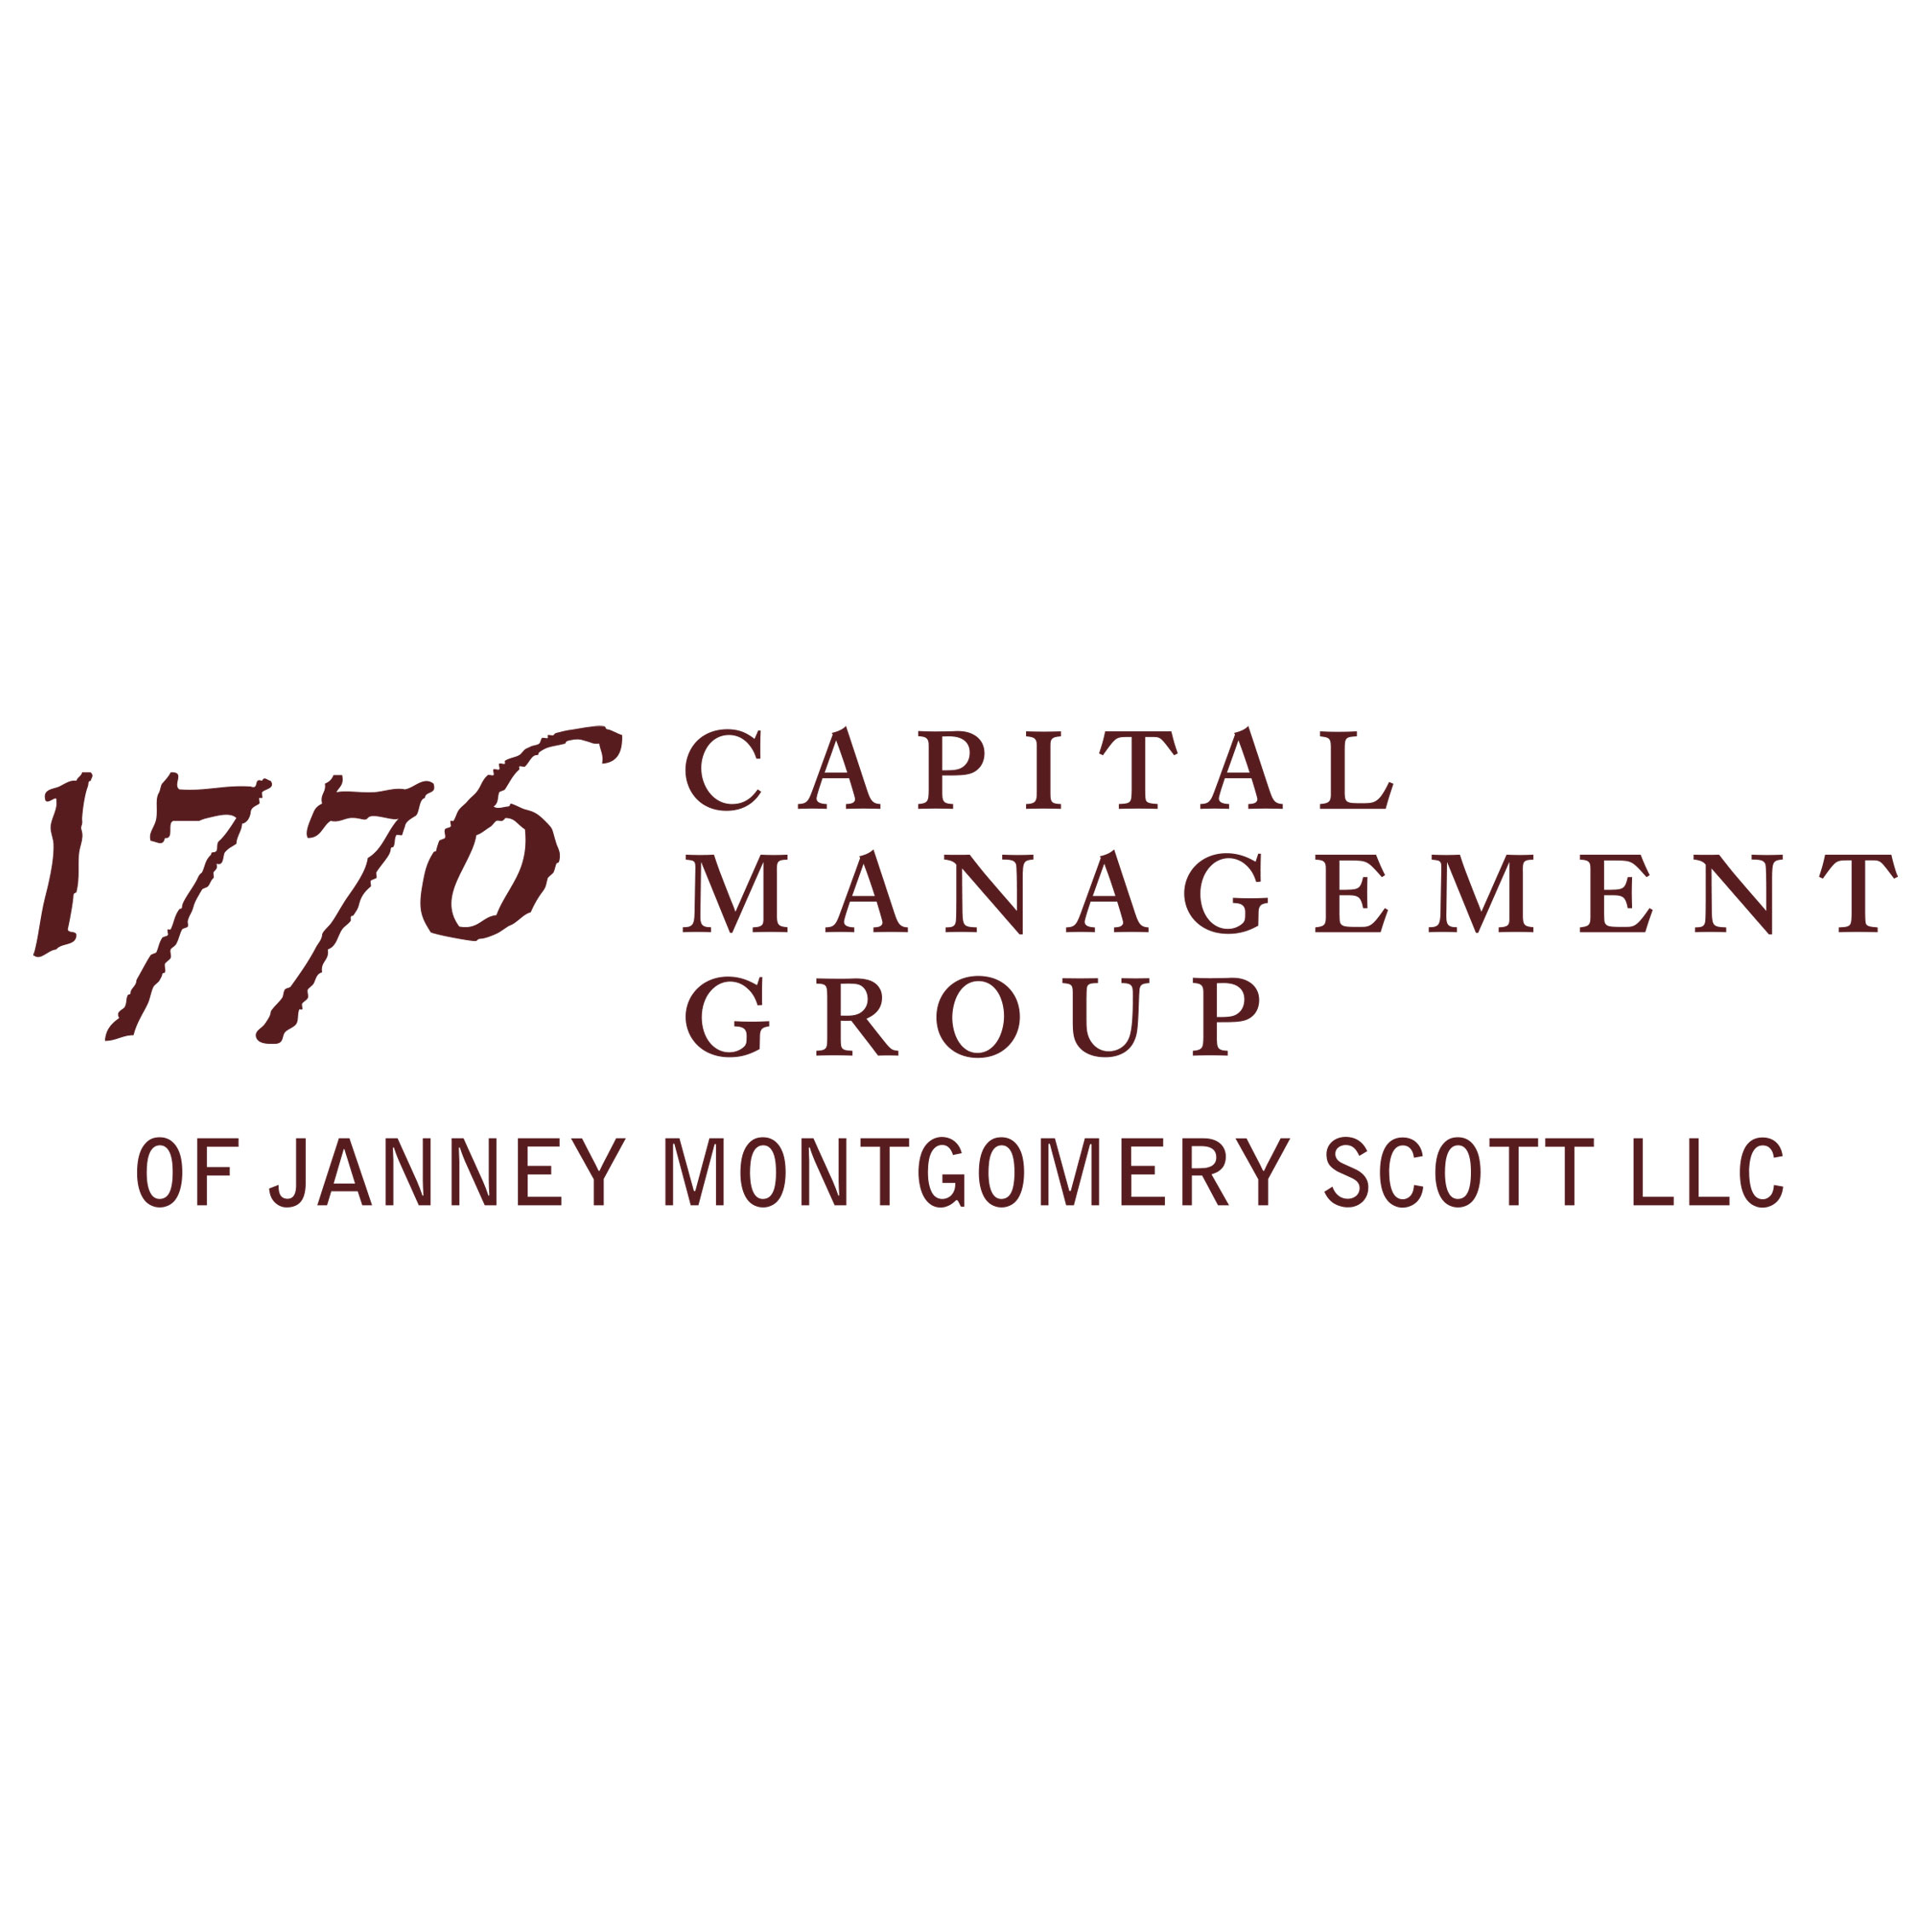 1776 Capital Management Group